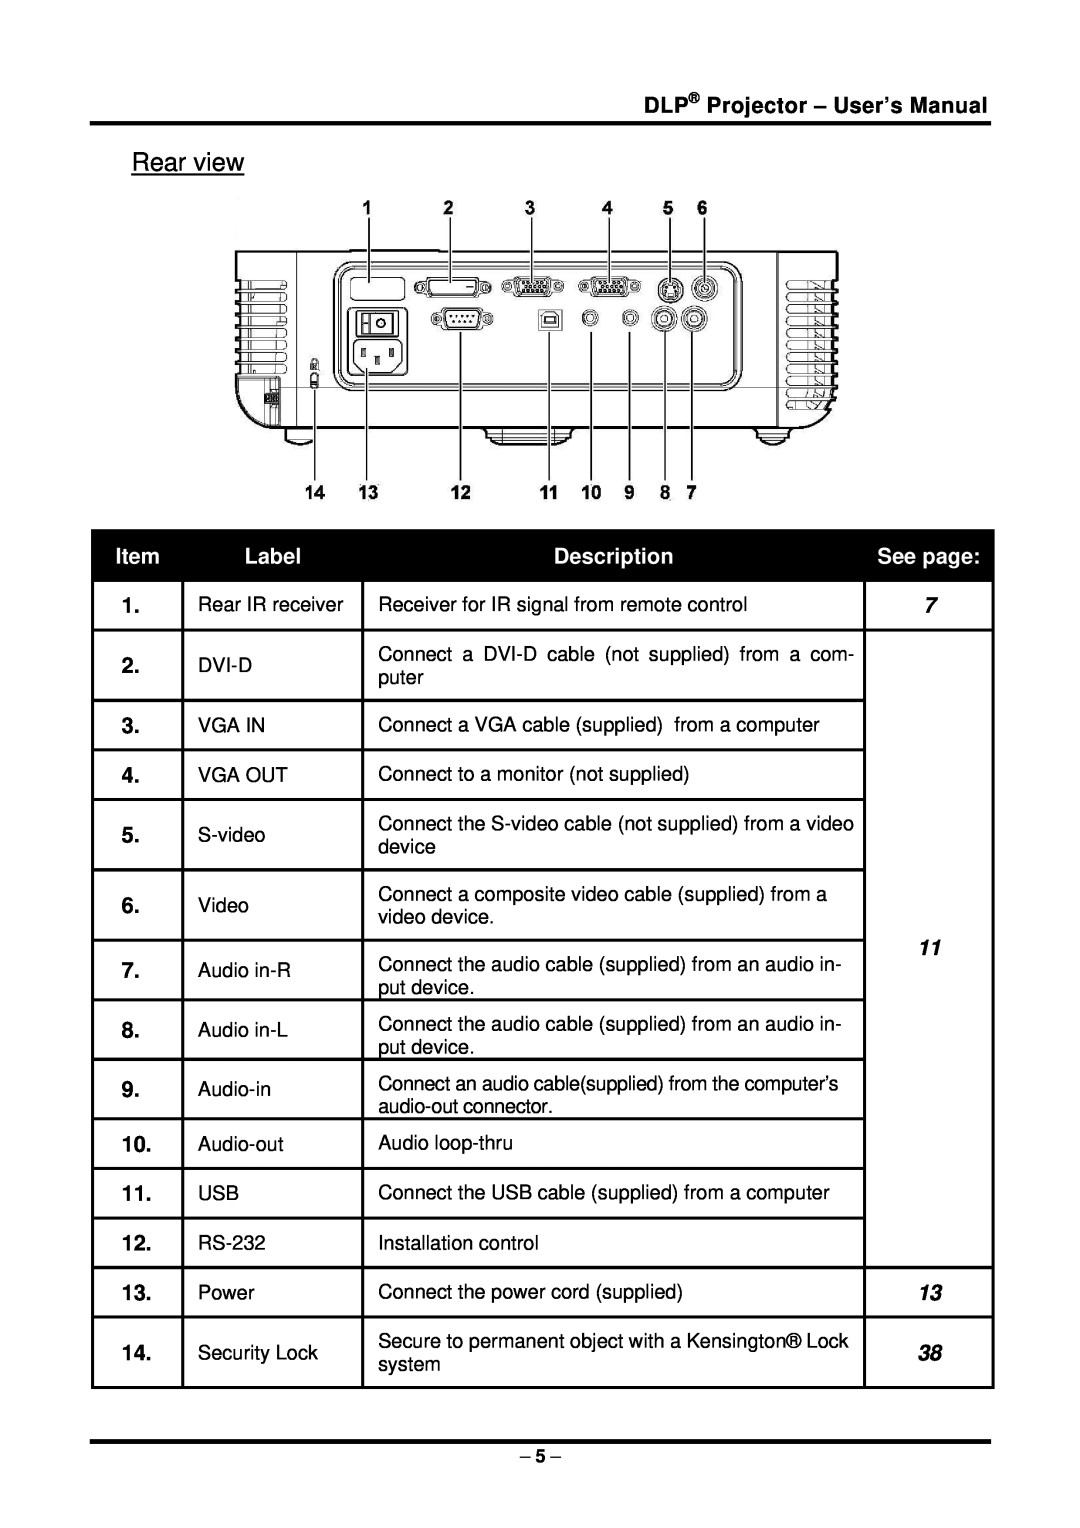 Planar PR5022 manual Rear view, DLP Projector - User’s Manual, Label, Description, See page 